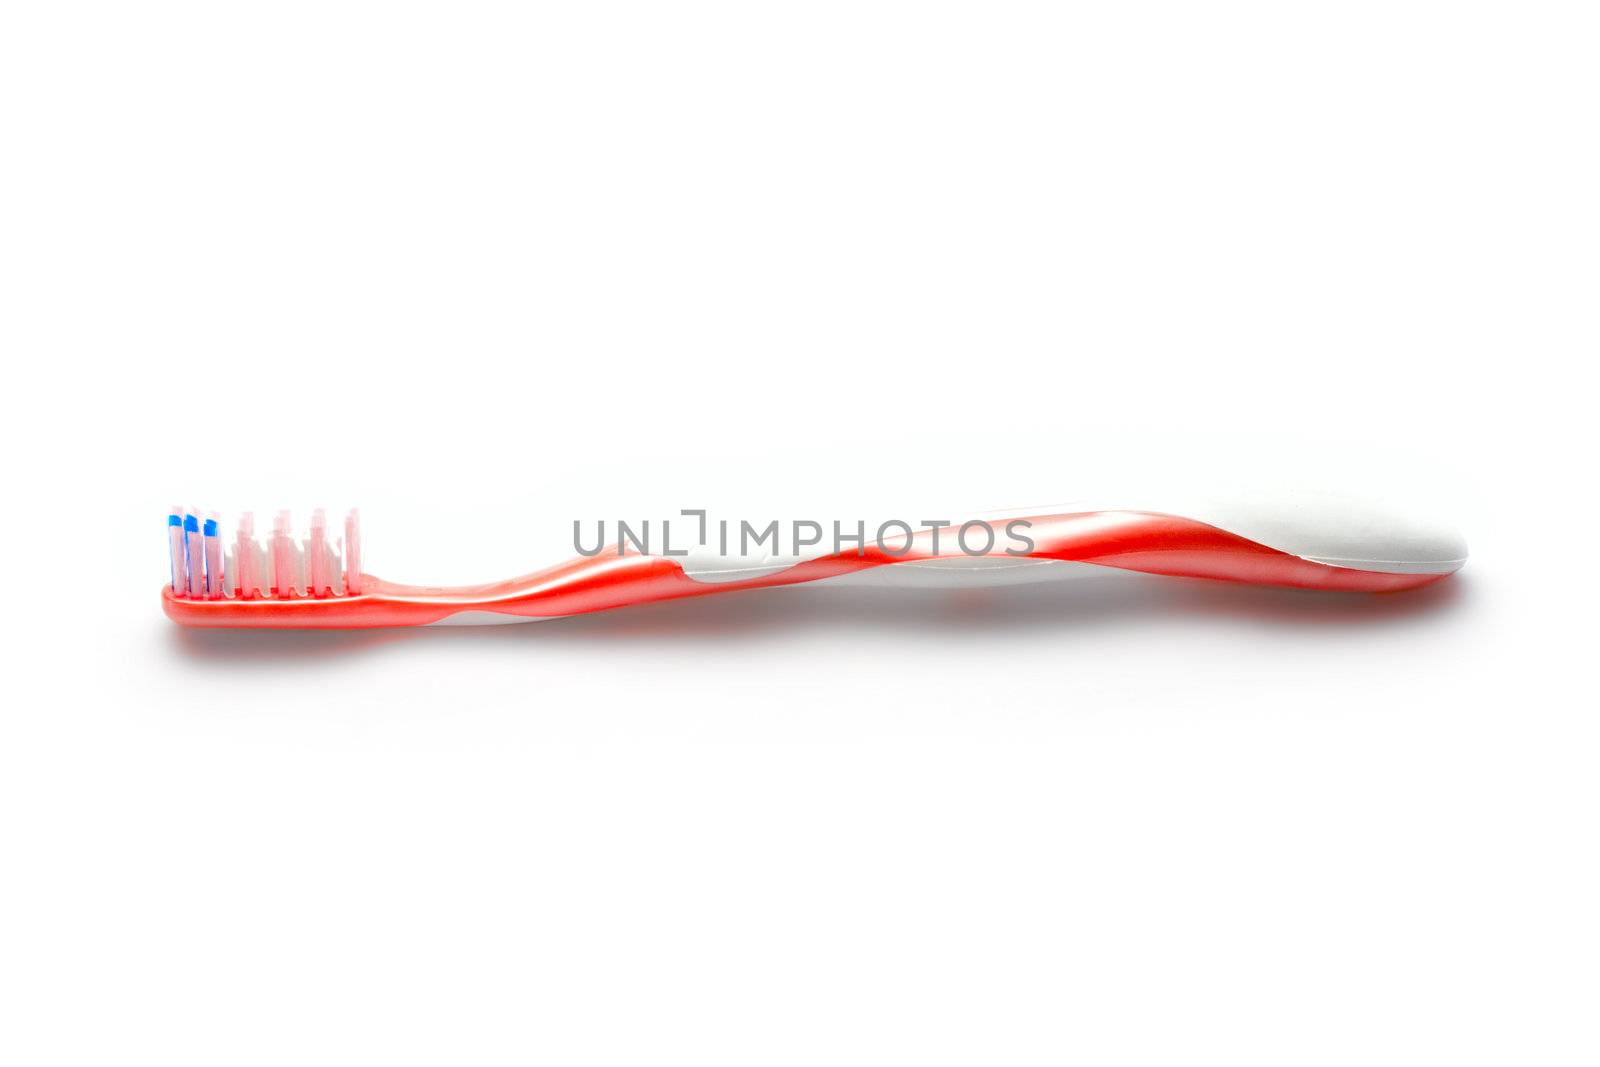 Toothbrush isolated on white by Garsya